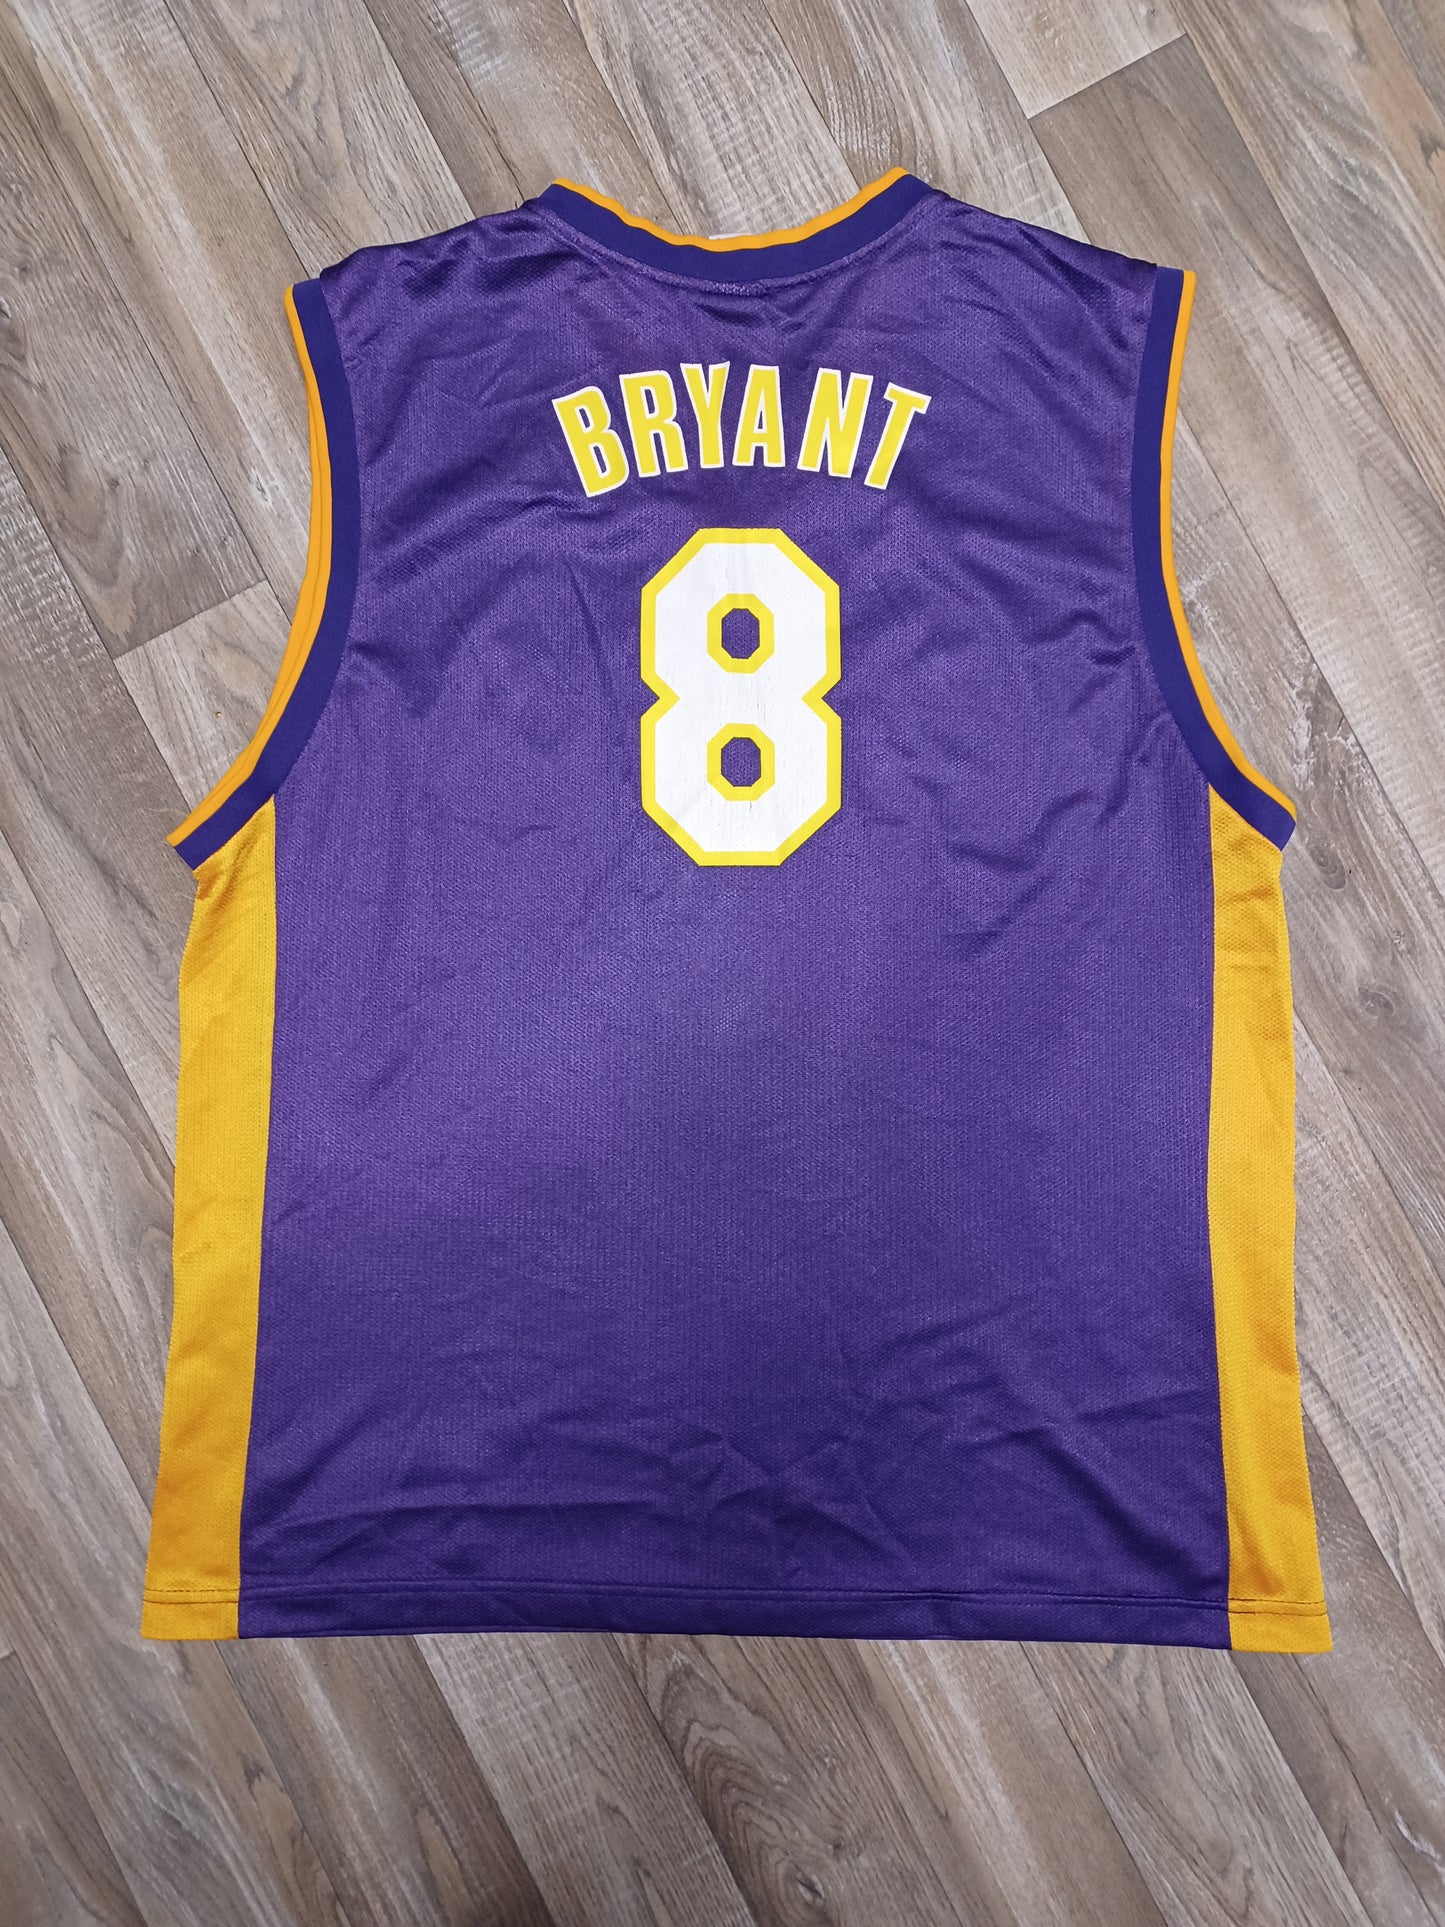 Kobe Bryant Los Angeles Lakers Jersey Size XL